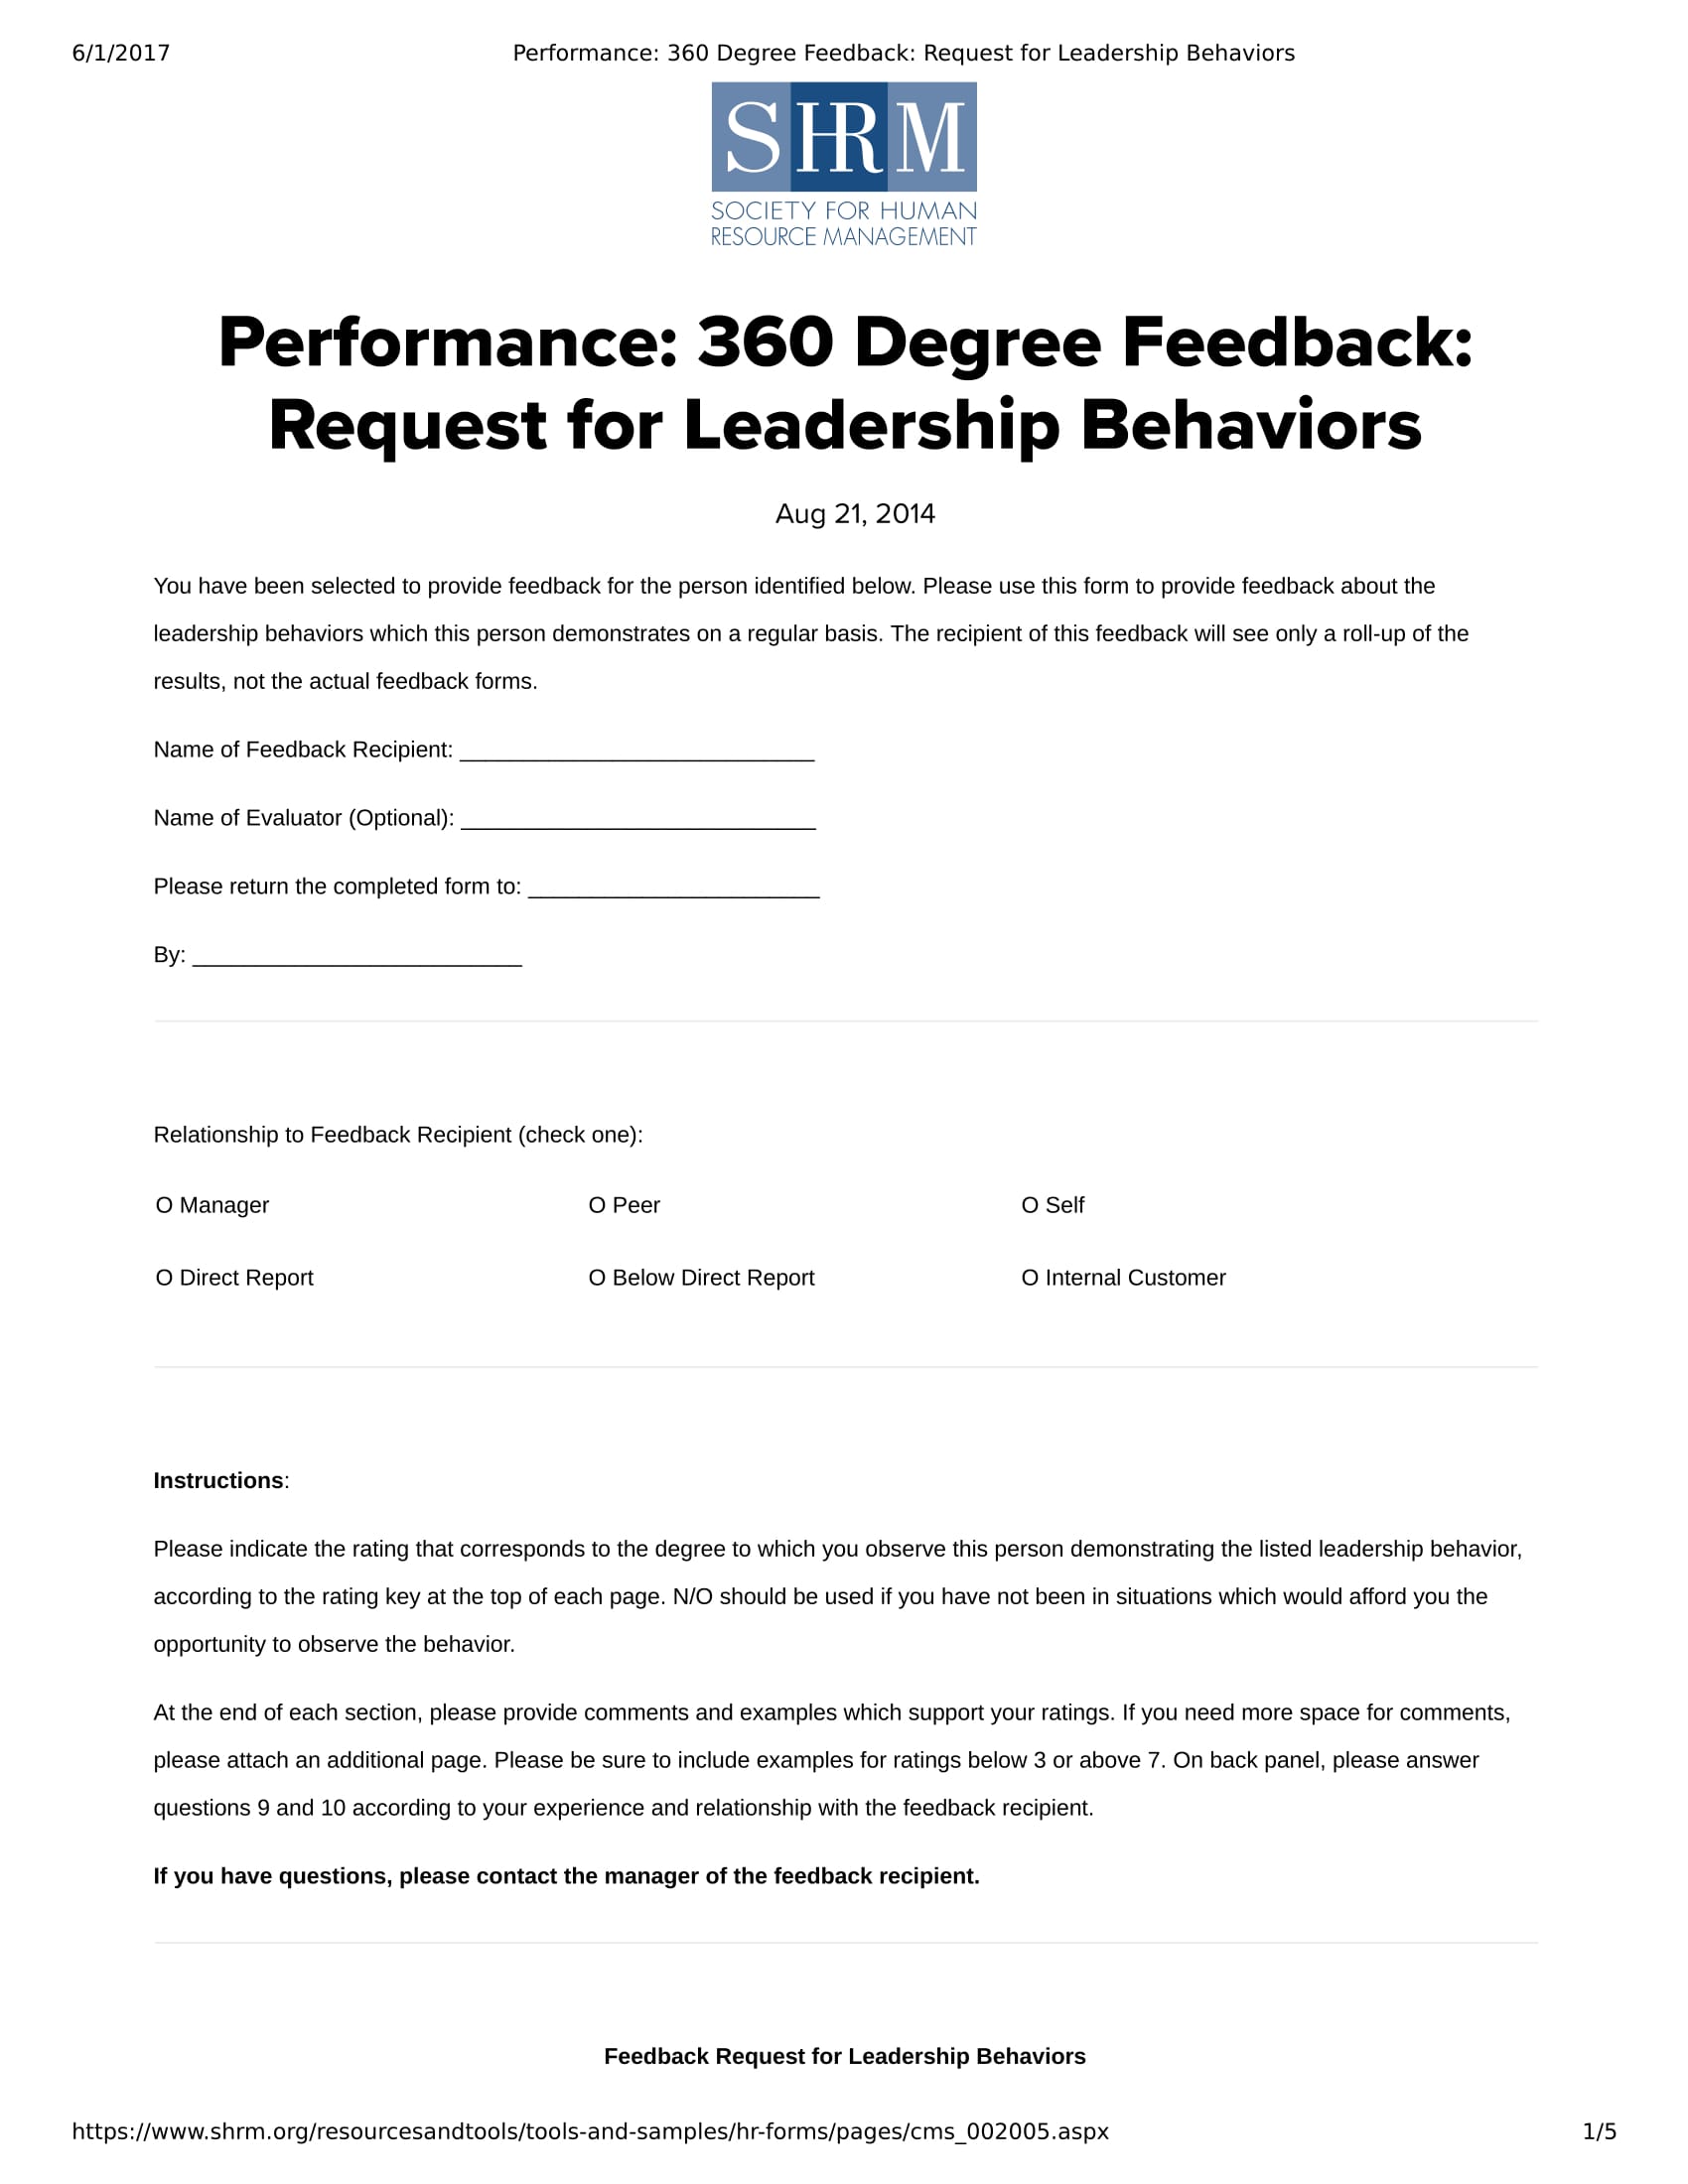 360 degree feedback request for leadership behaviors